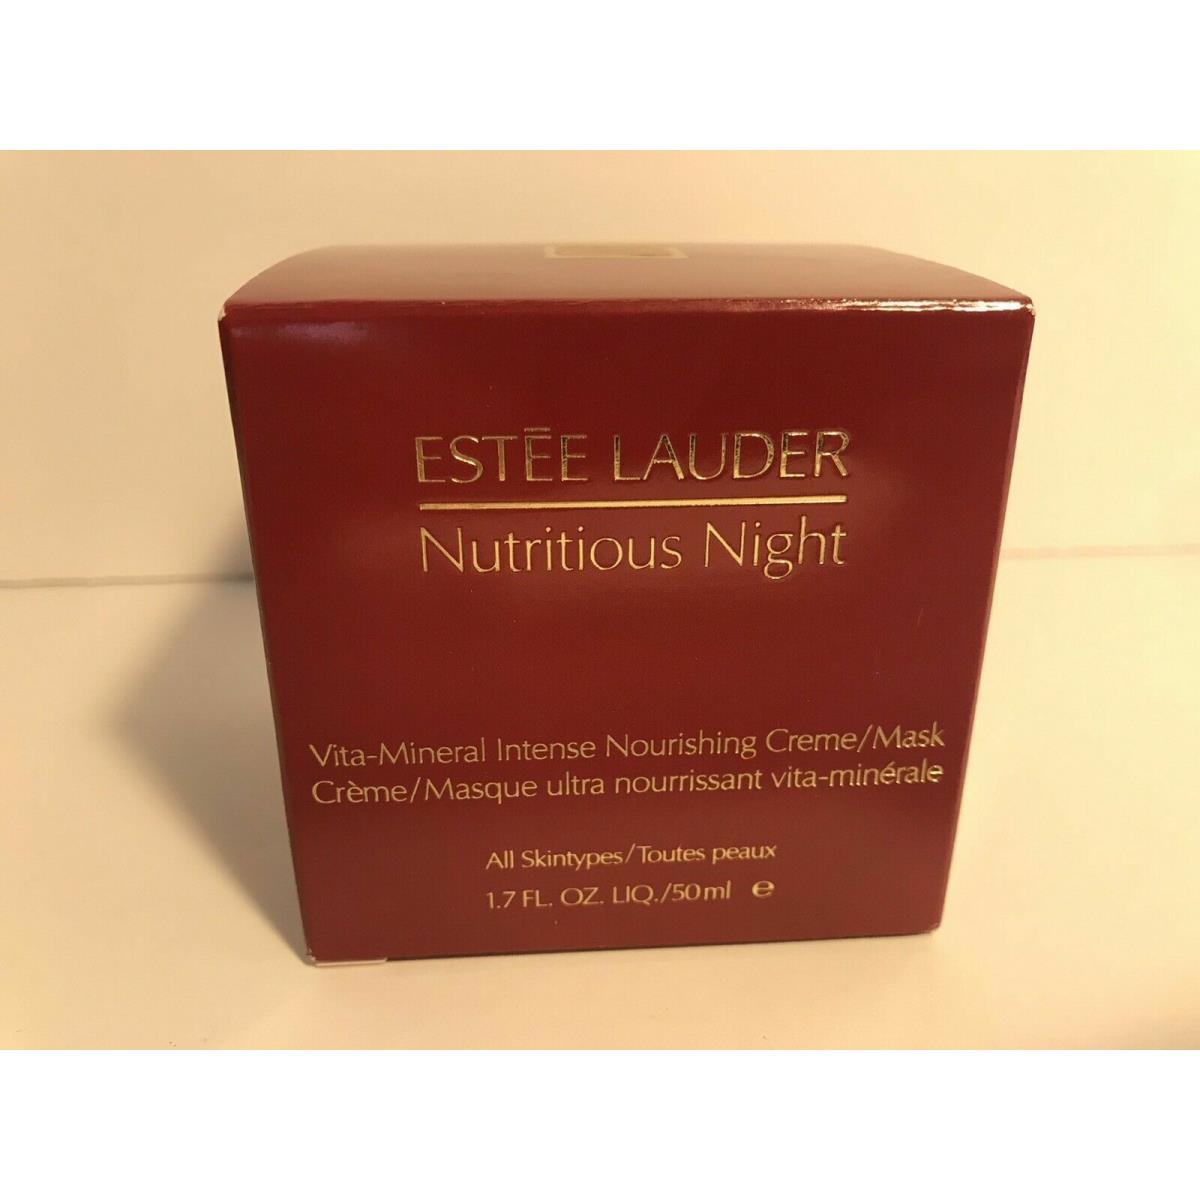 Estee Lauder Nutritious Night Vita-mineral Intense Nourishing Creme Mask 1.7 oz